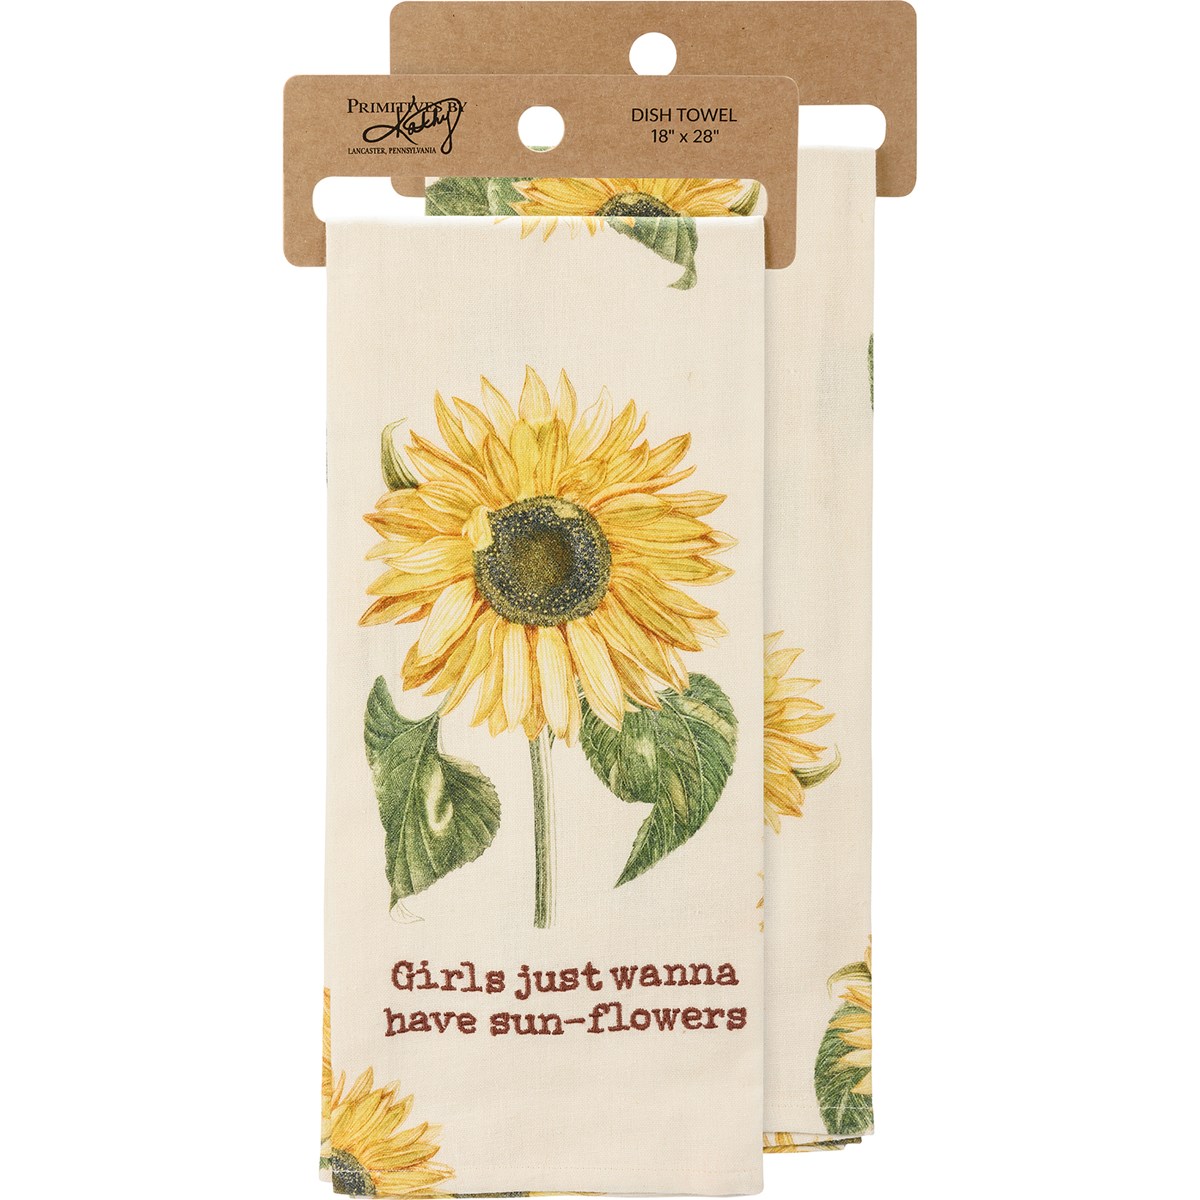 Girls Just Wanna Have Sunflowers Kitchen Towel - Cotton Linen